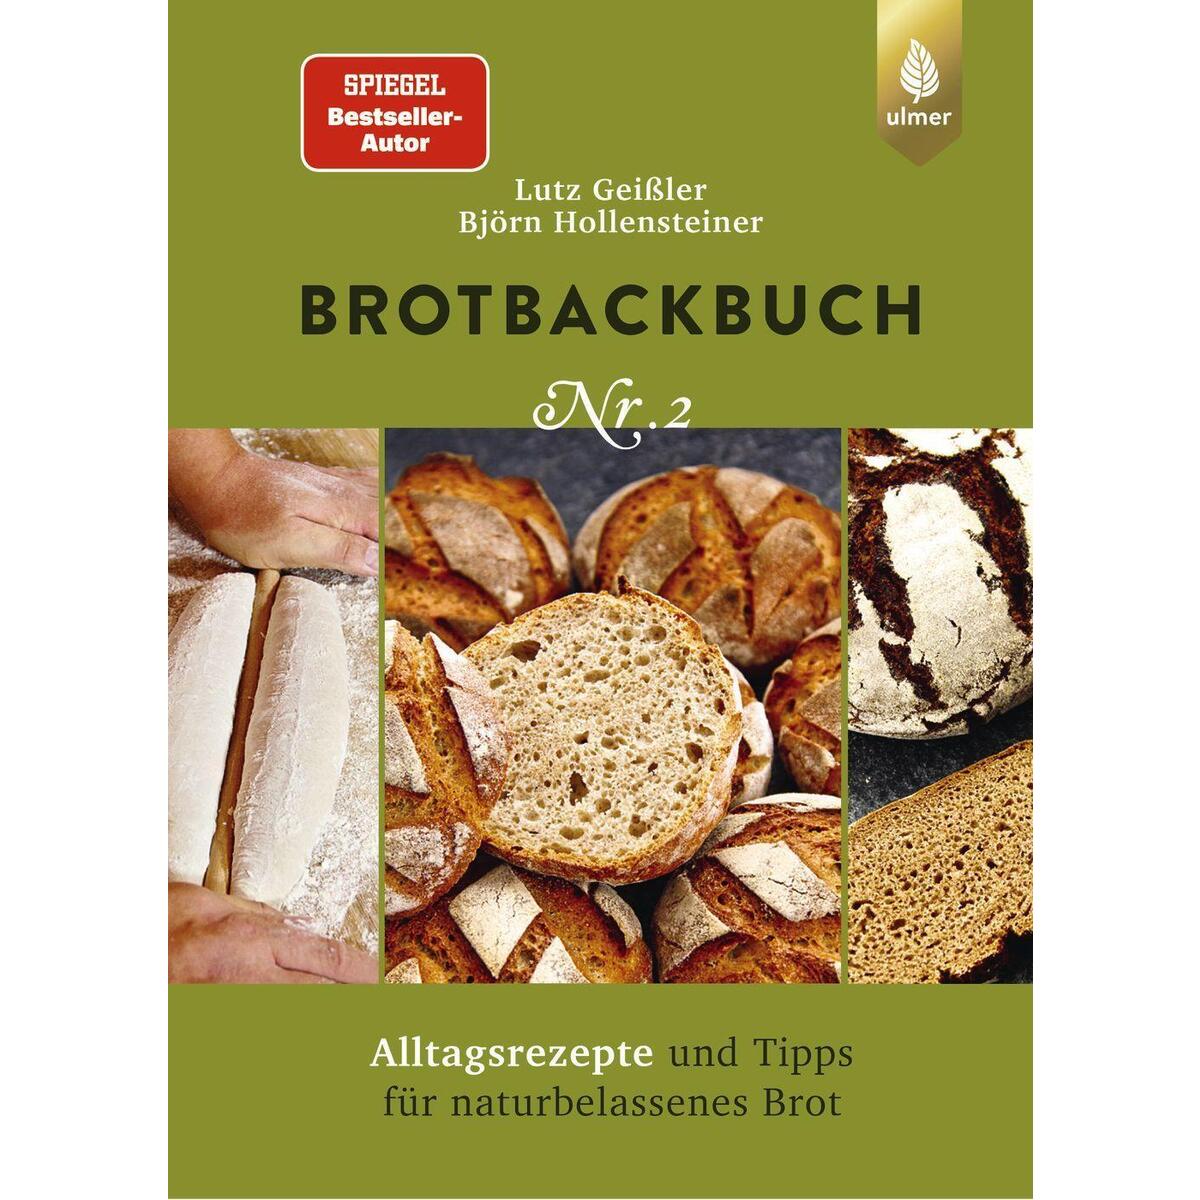 Brotbackbuch Nr. 2 von Ulmer Eugen Verlag